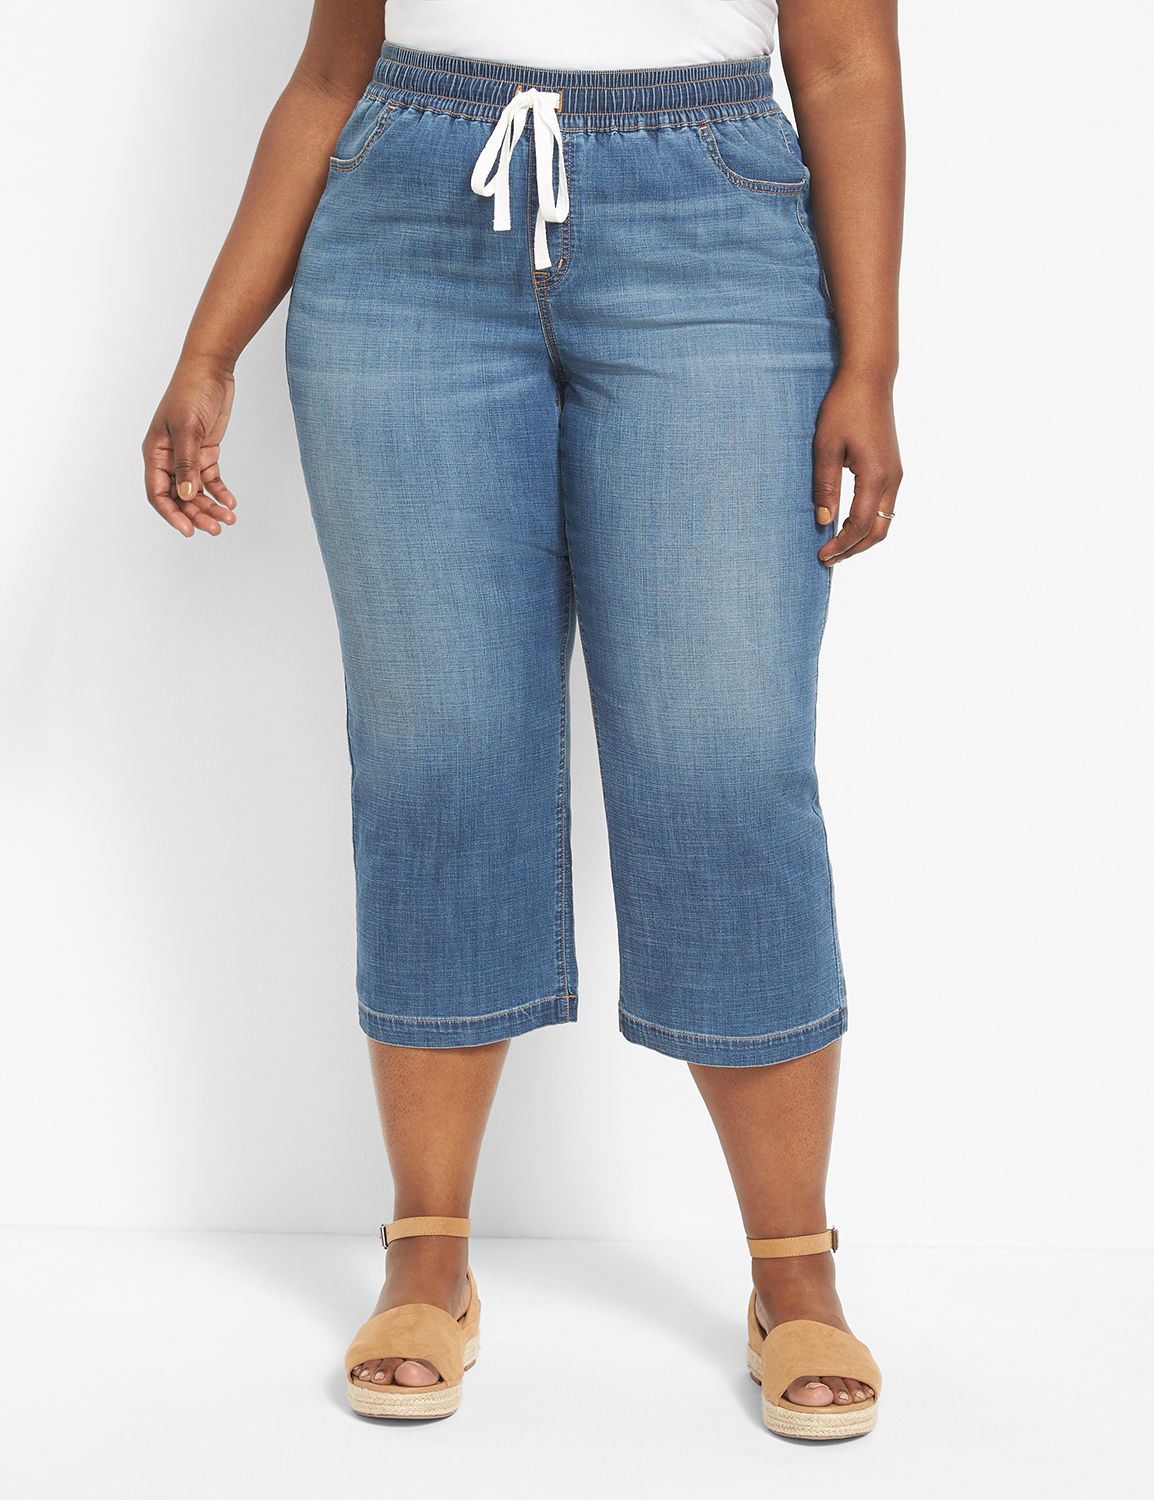 pull capris: Women's Jeans